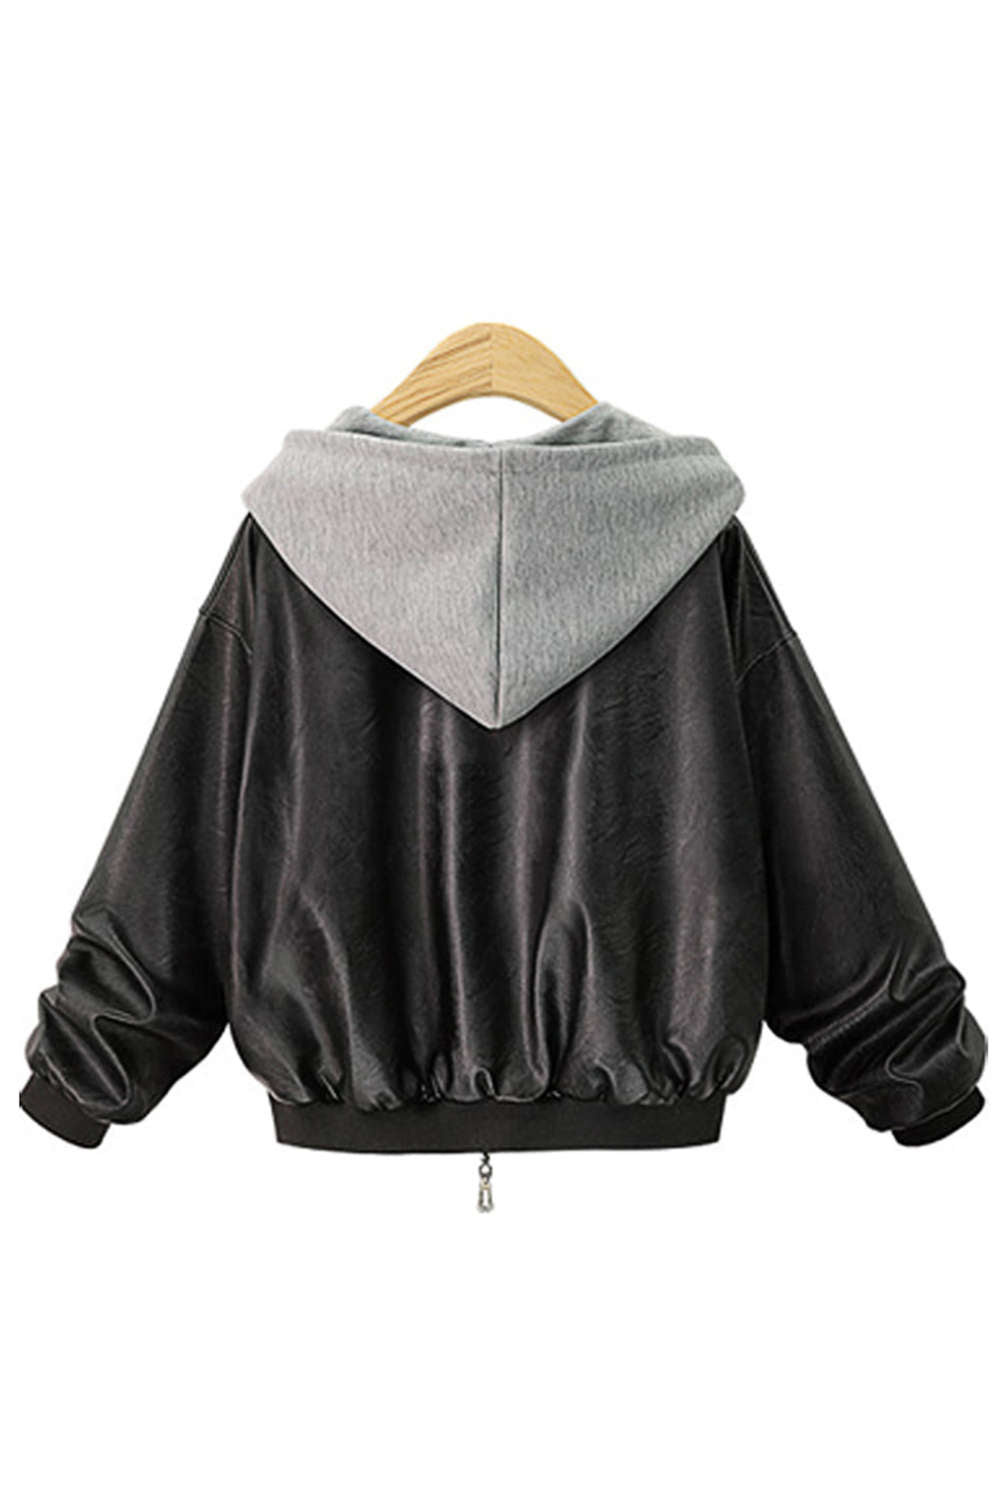 Iyasson Women's Oversize Hooded Jackets